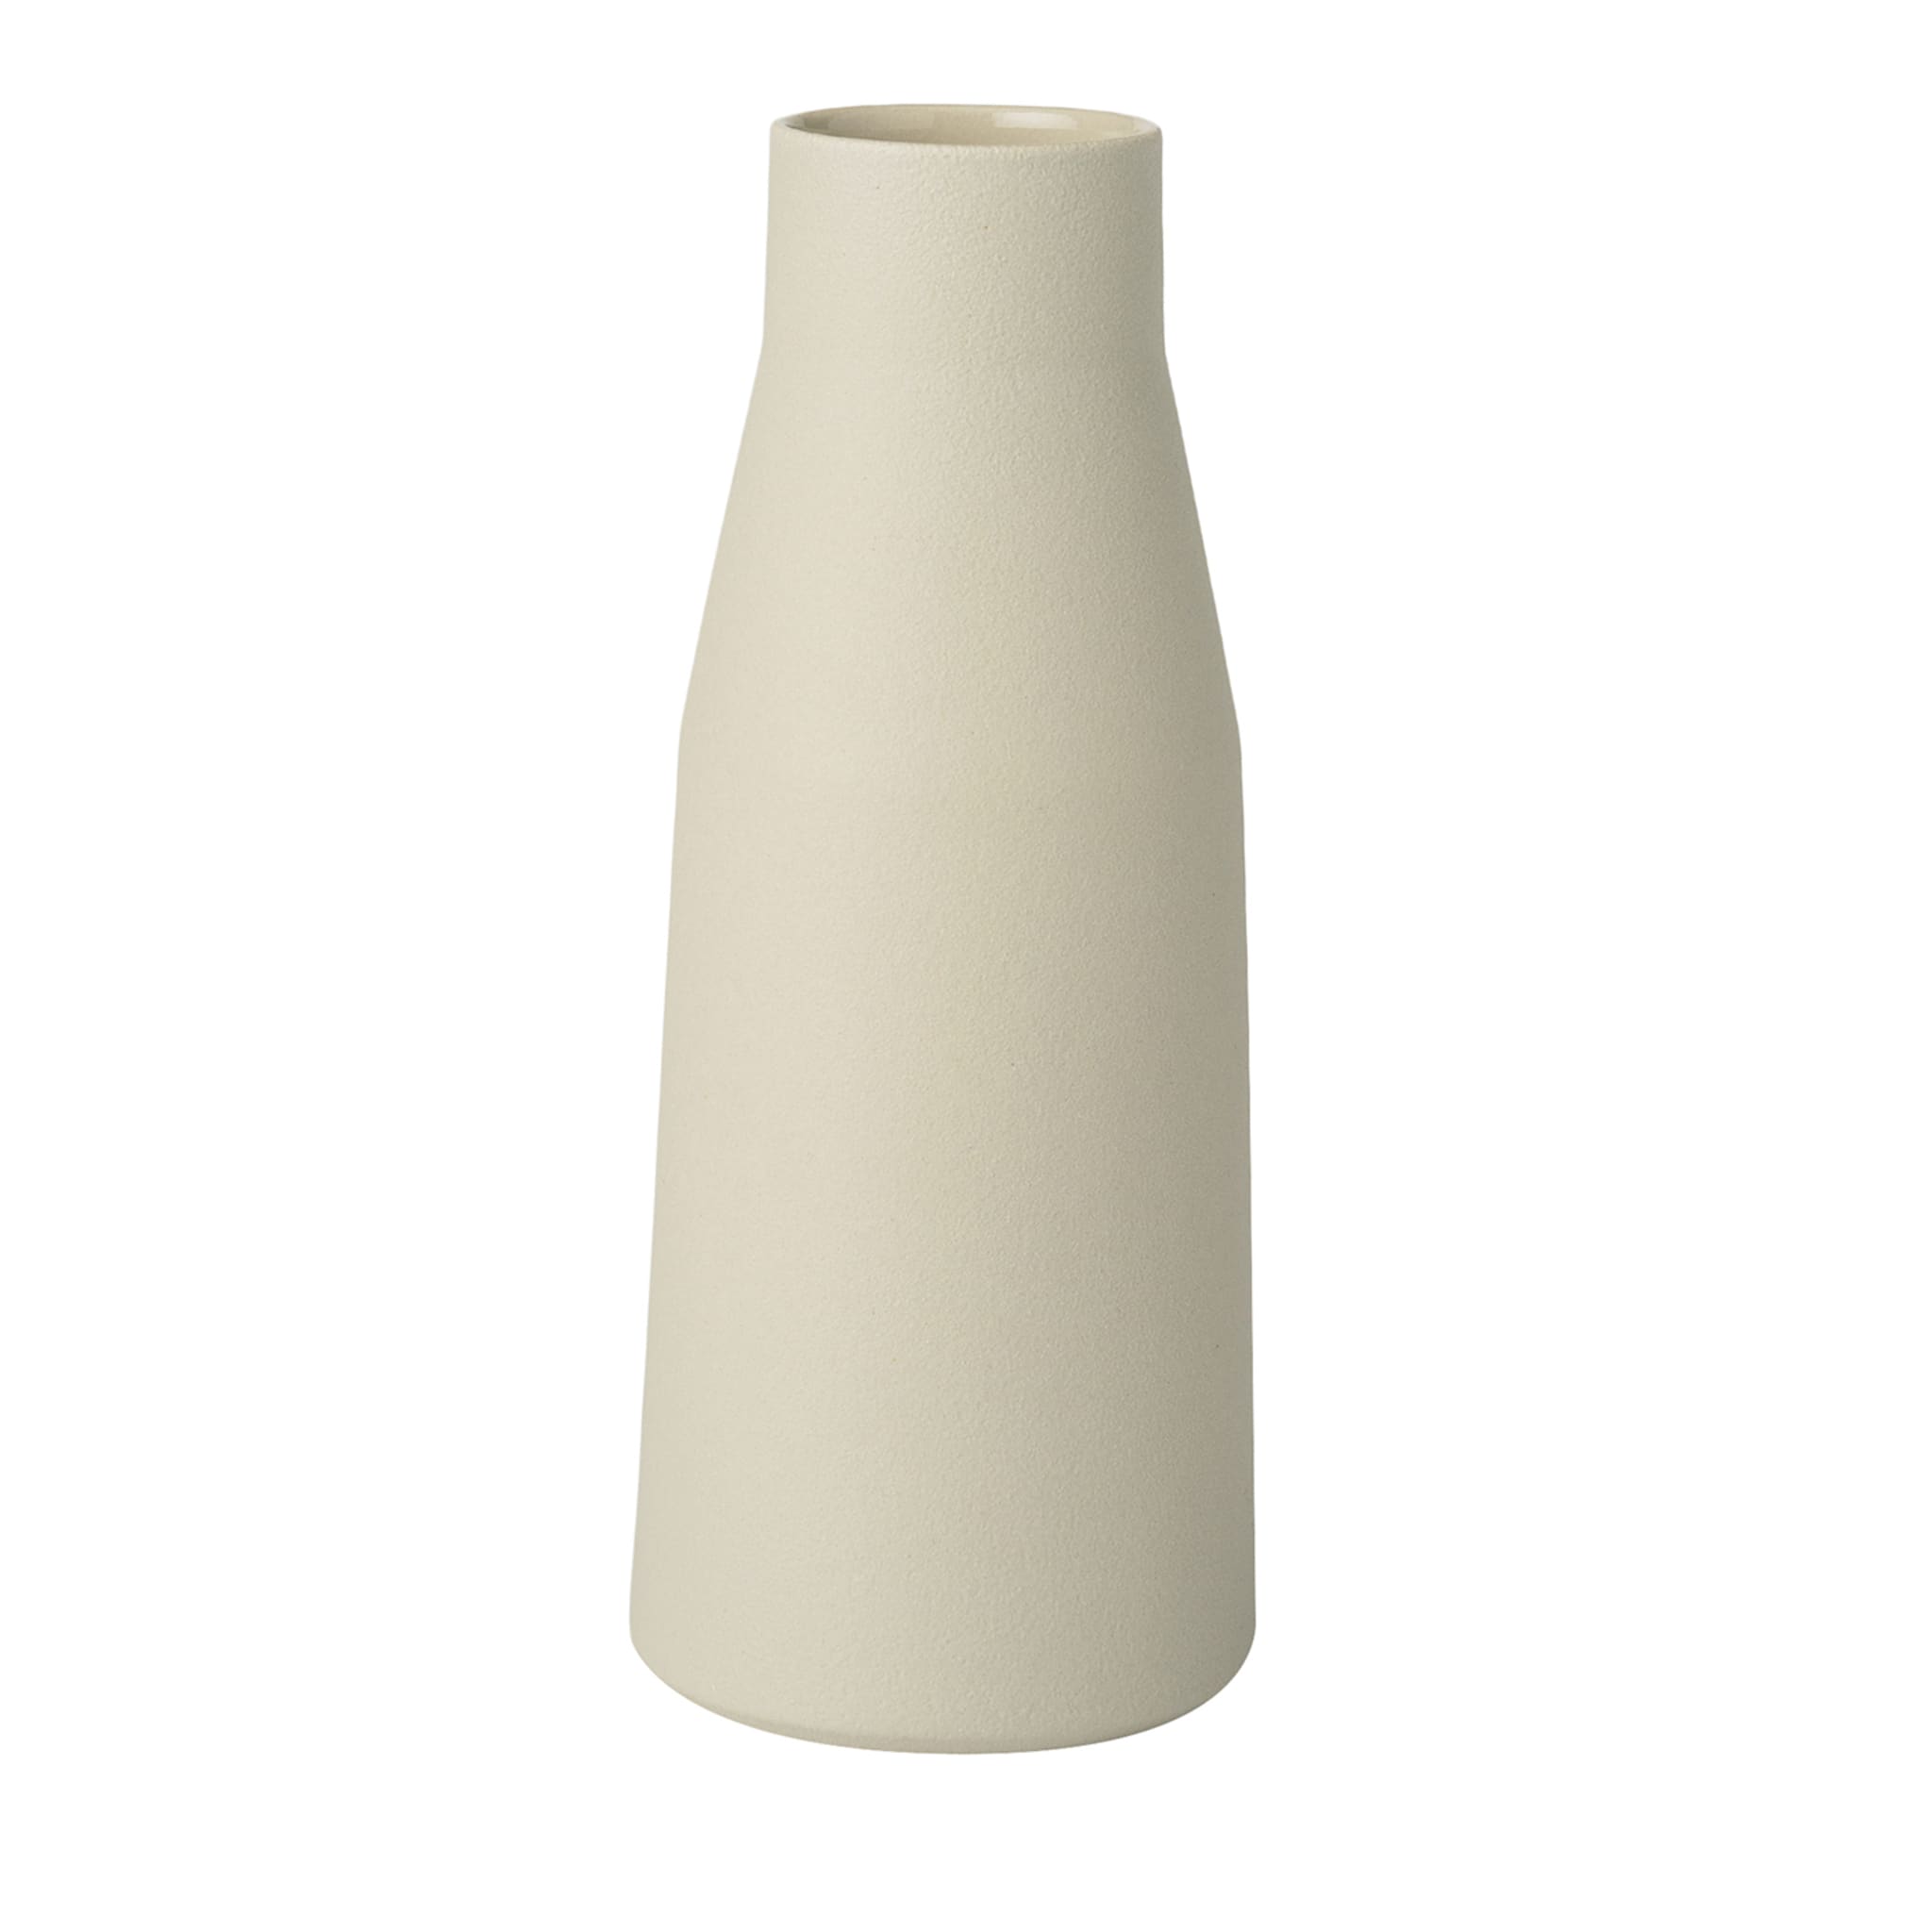 Ceramic Vase or Carafe - Main view